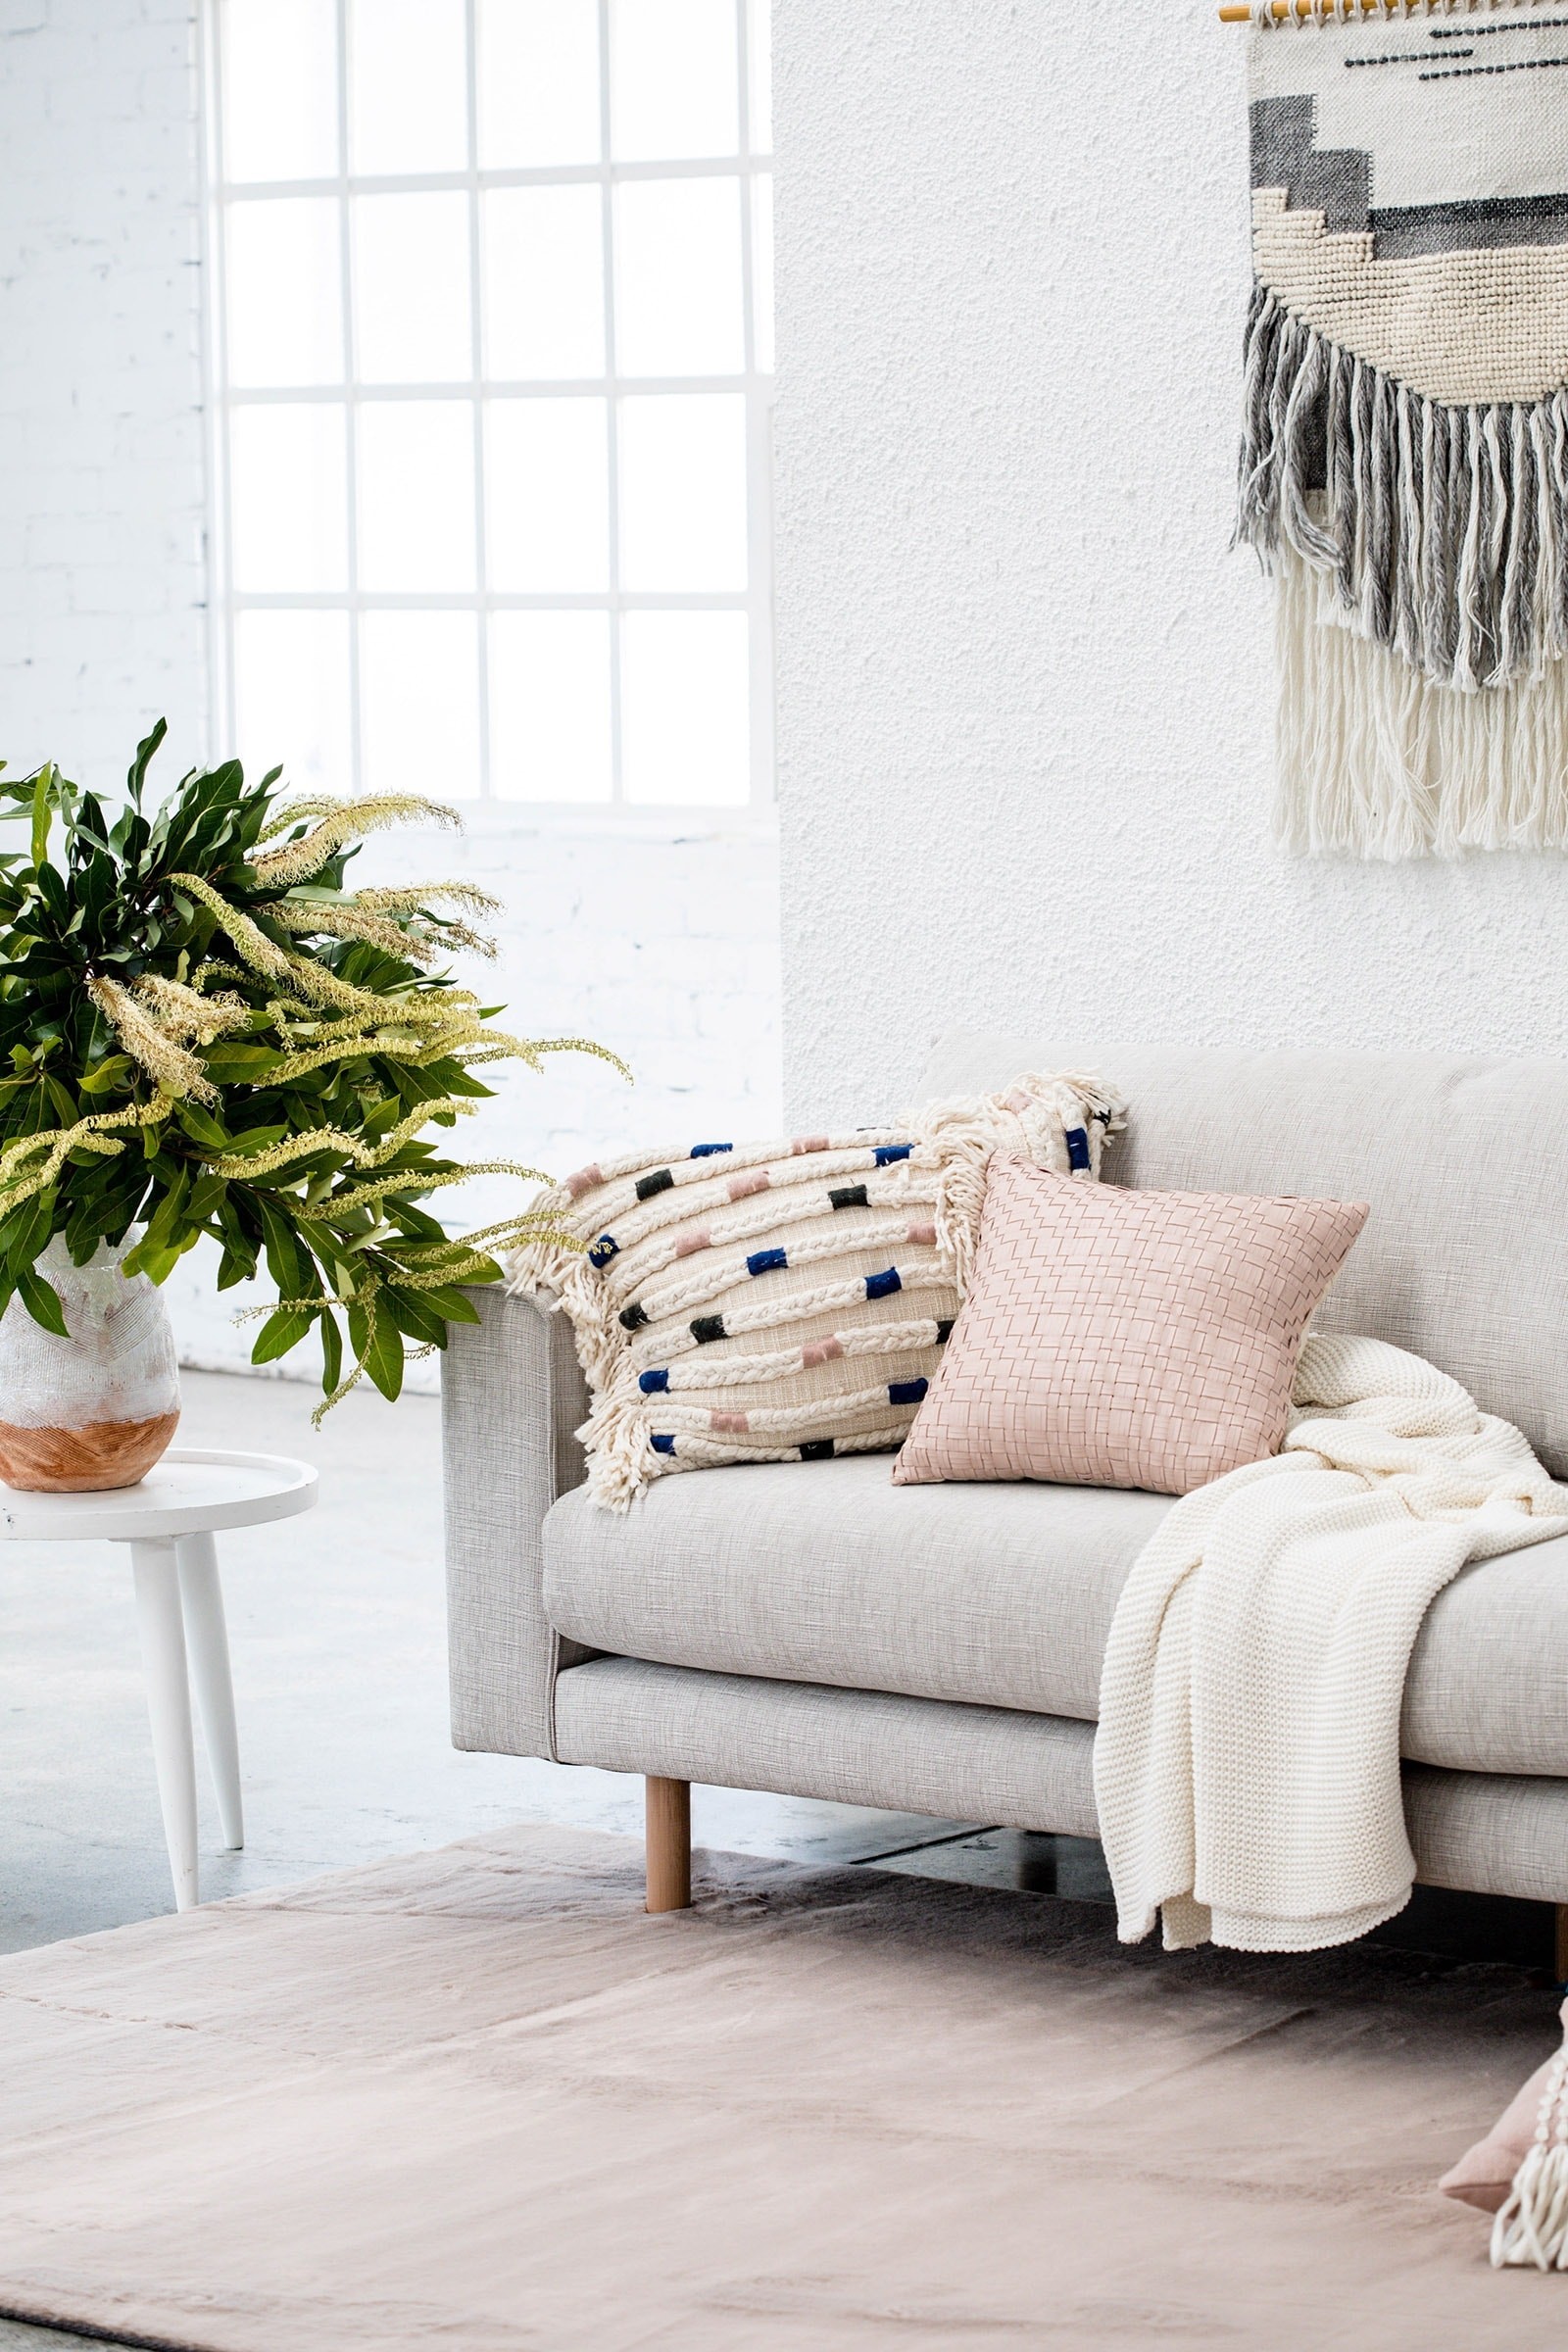 oz design light grey sofa with bohemian cushions and australian natives in vase